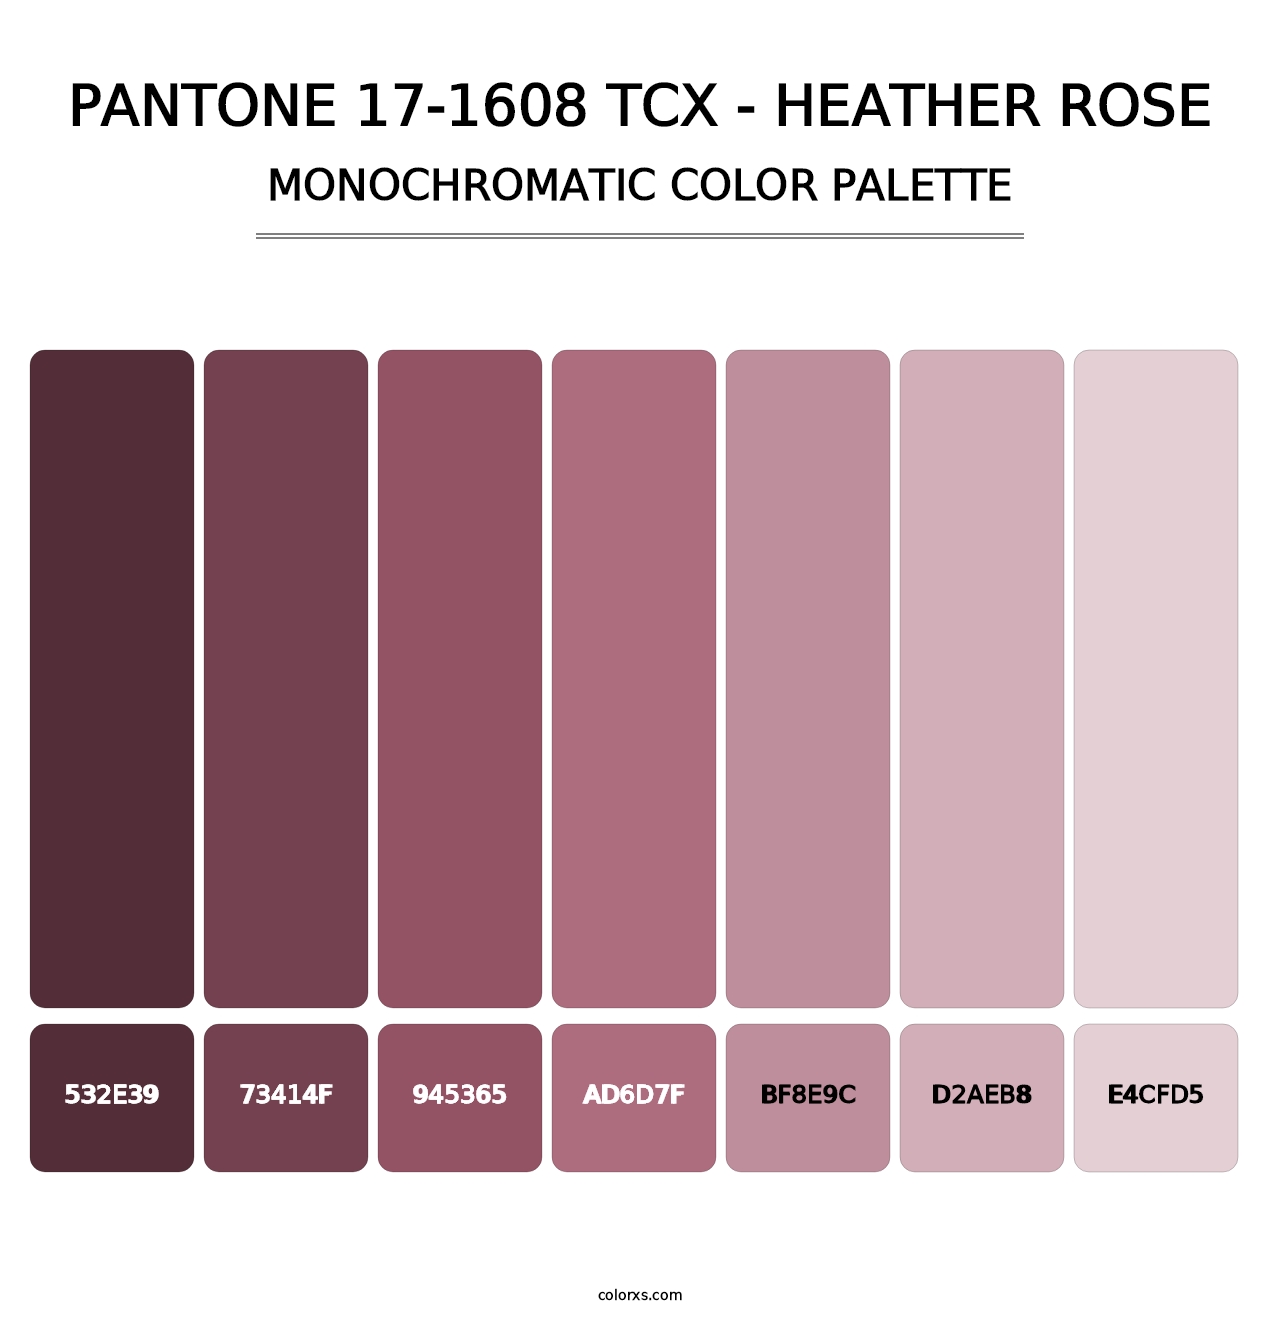 PANTONE 17-1608 TCX - Heather Rose - Monochromatic Color Palette